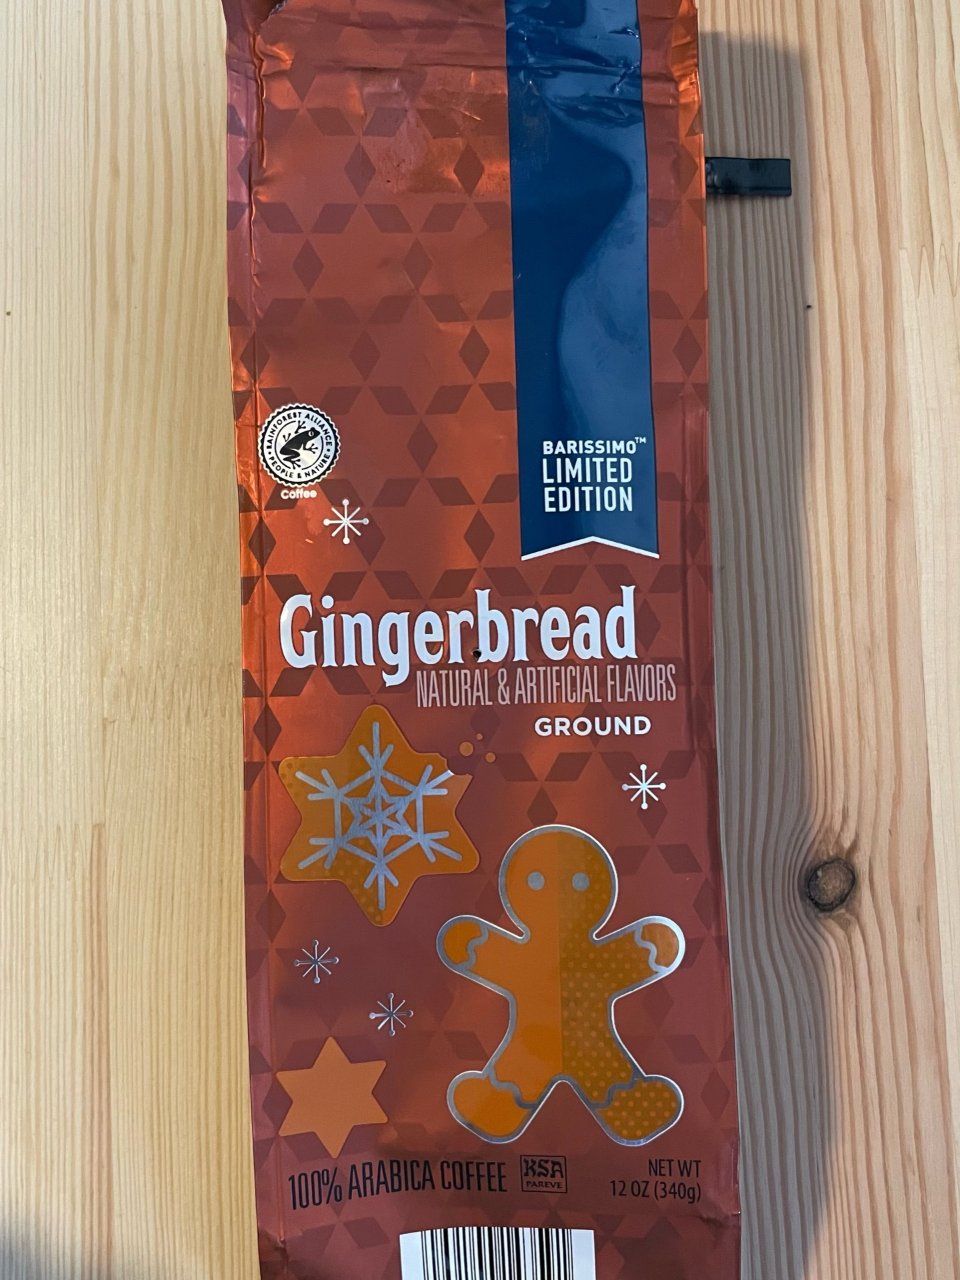 Gingerbread coffee